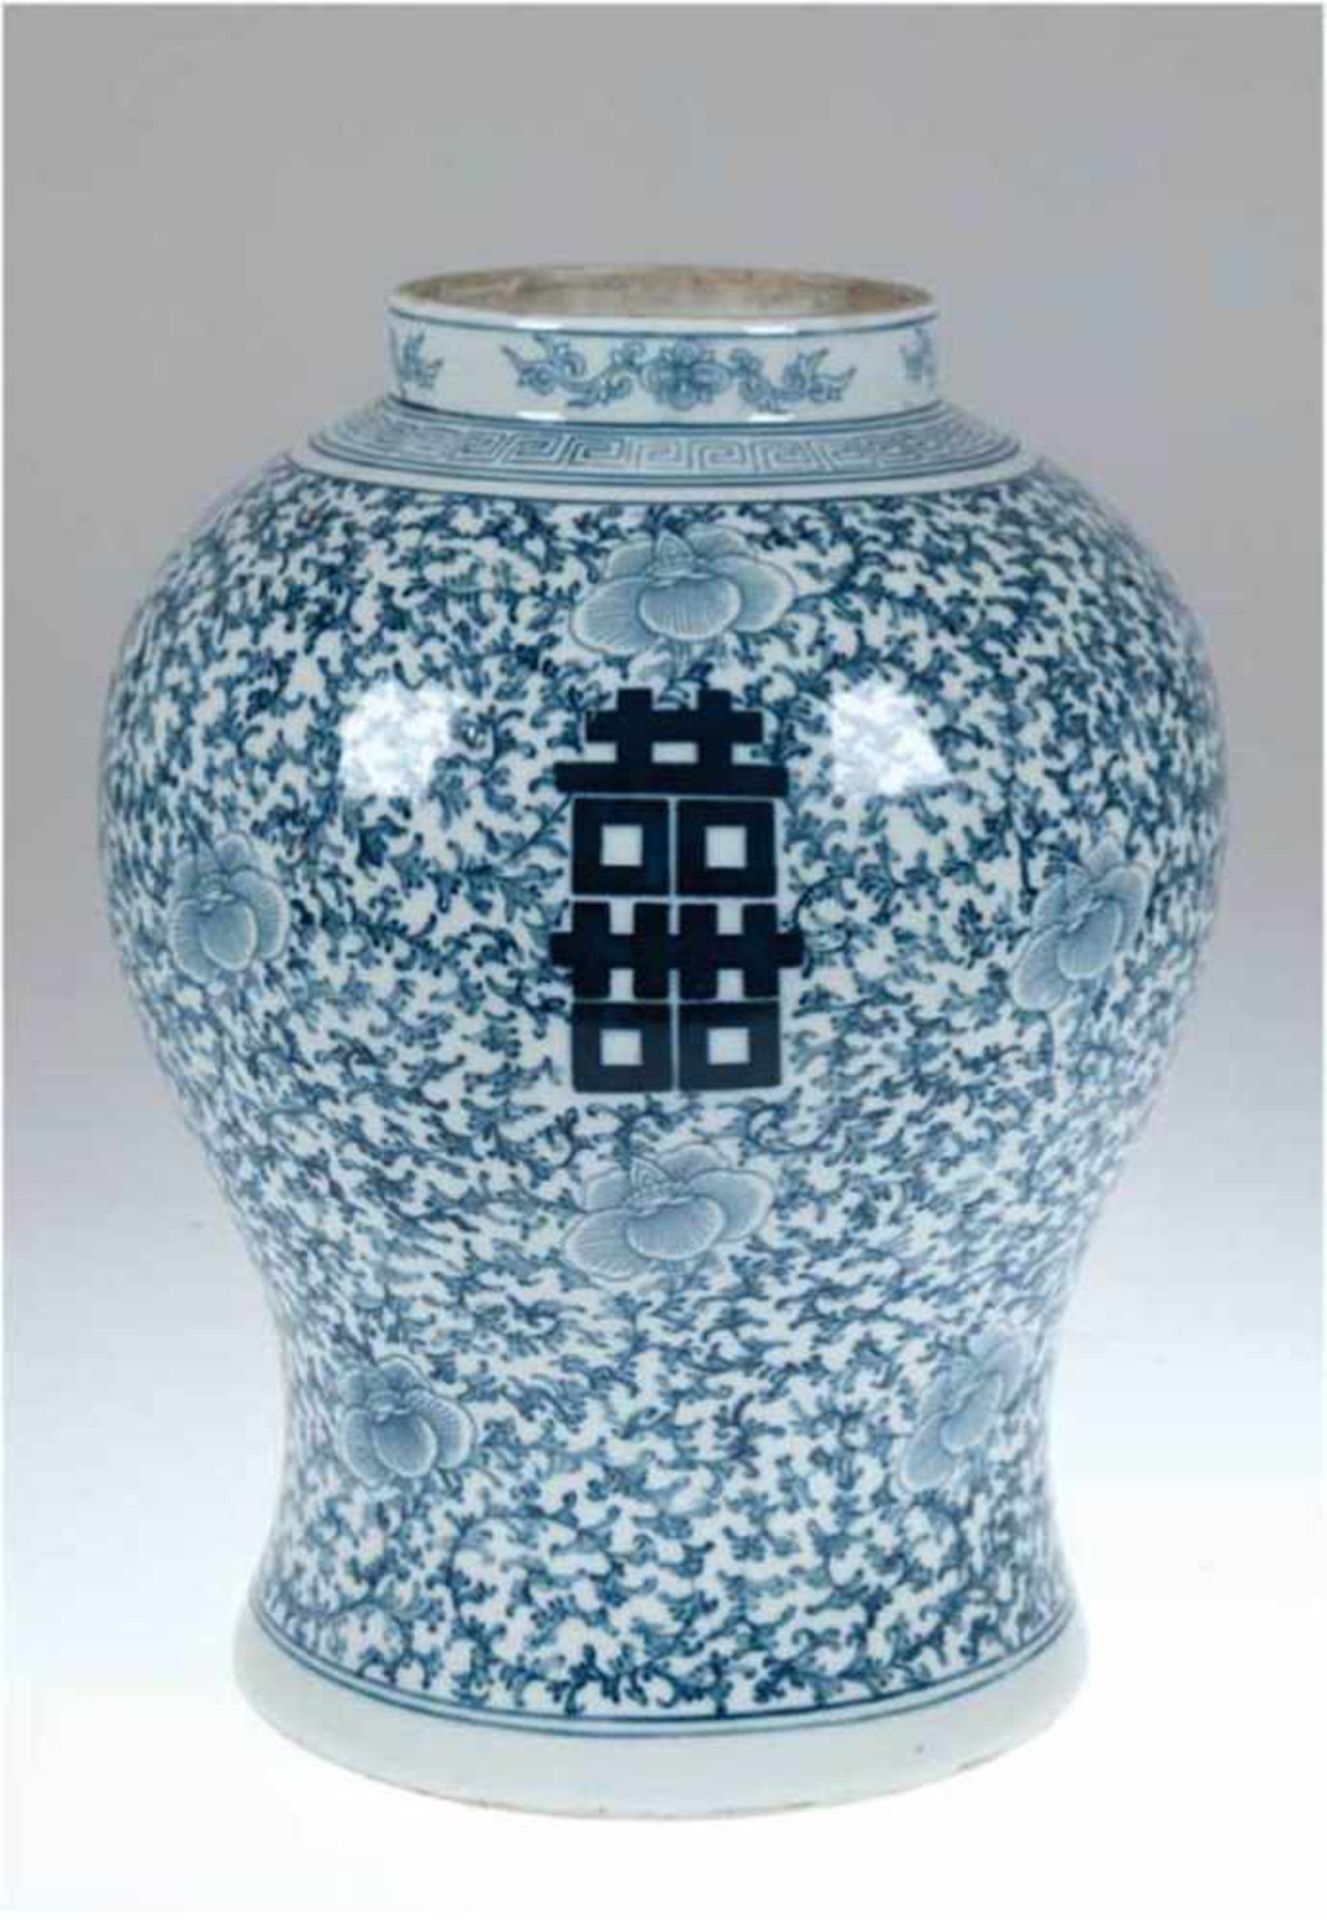 Vase, Asien 19. Jh., gebauchte Form, vollflächiger floraler Blaudekor, H. 35 cm